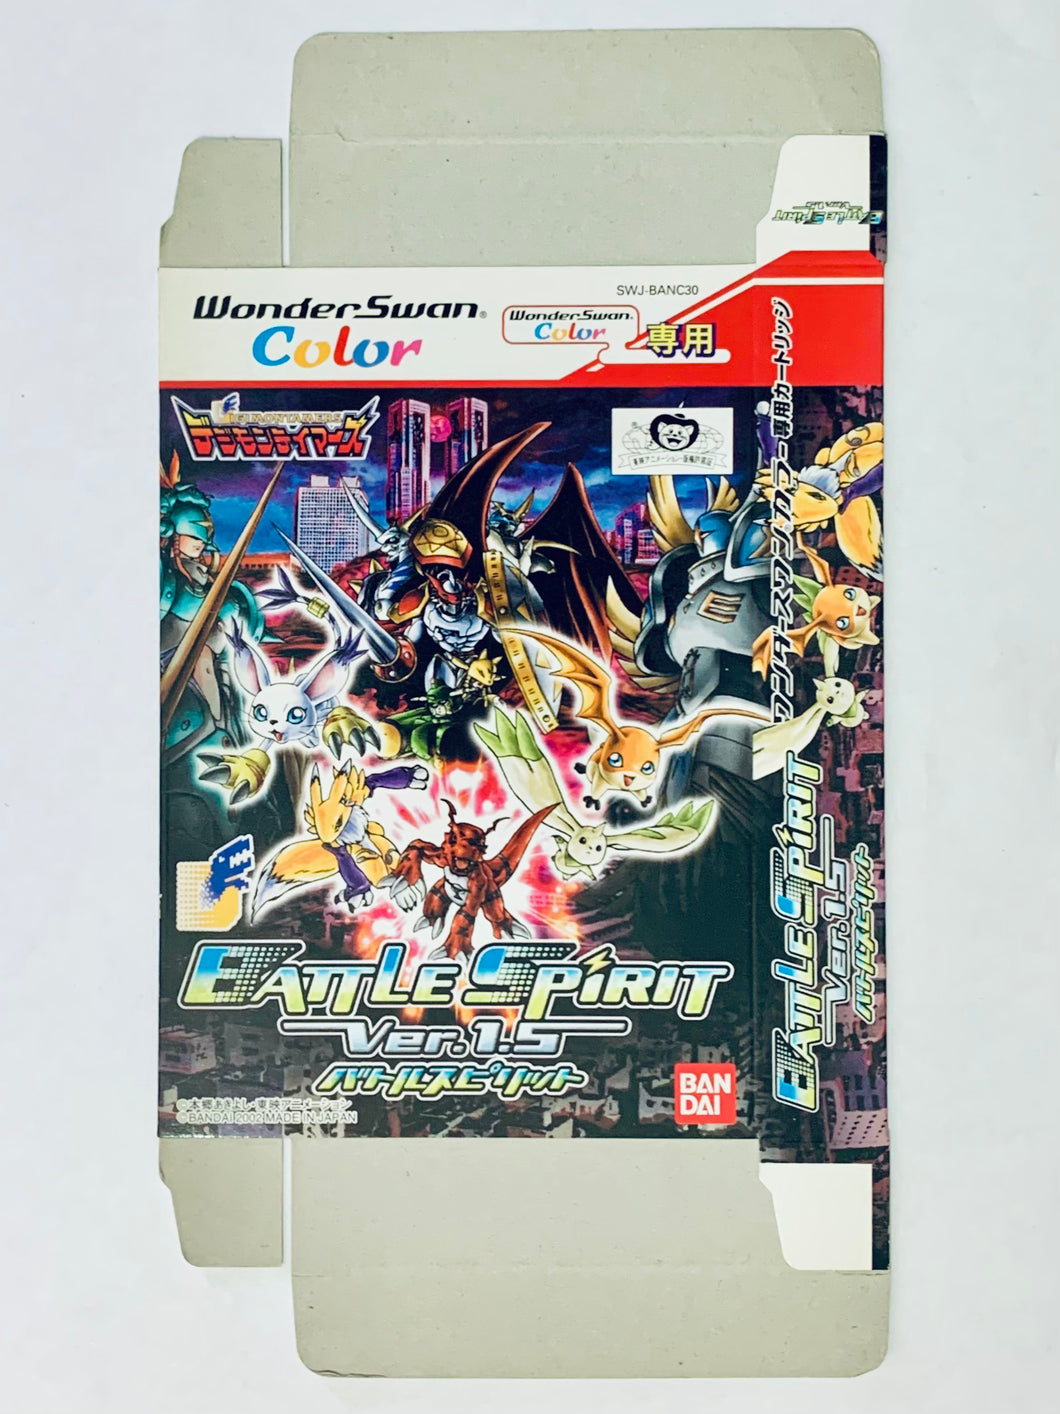 Battle Spirit: Digimon Tamers Ver 1.5 - WonderSwan Color - WSC - JP - Box Only (SWJ-BANC30)